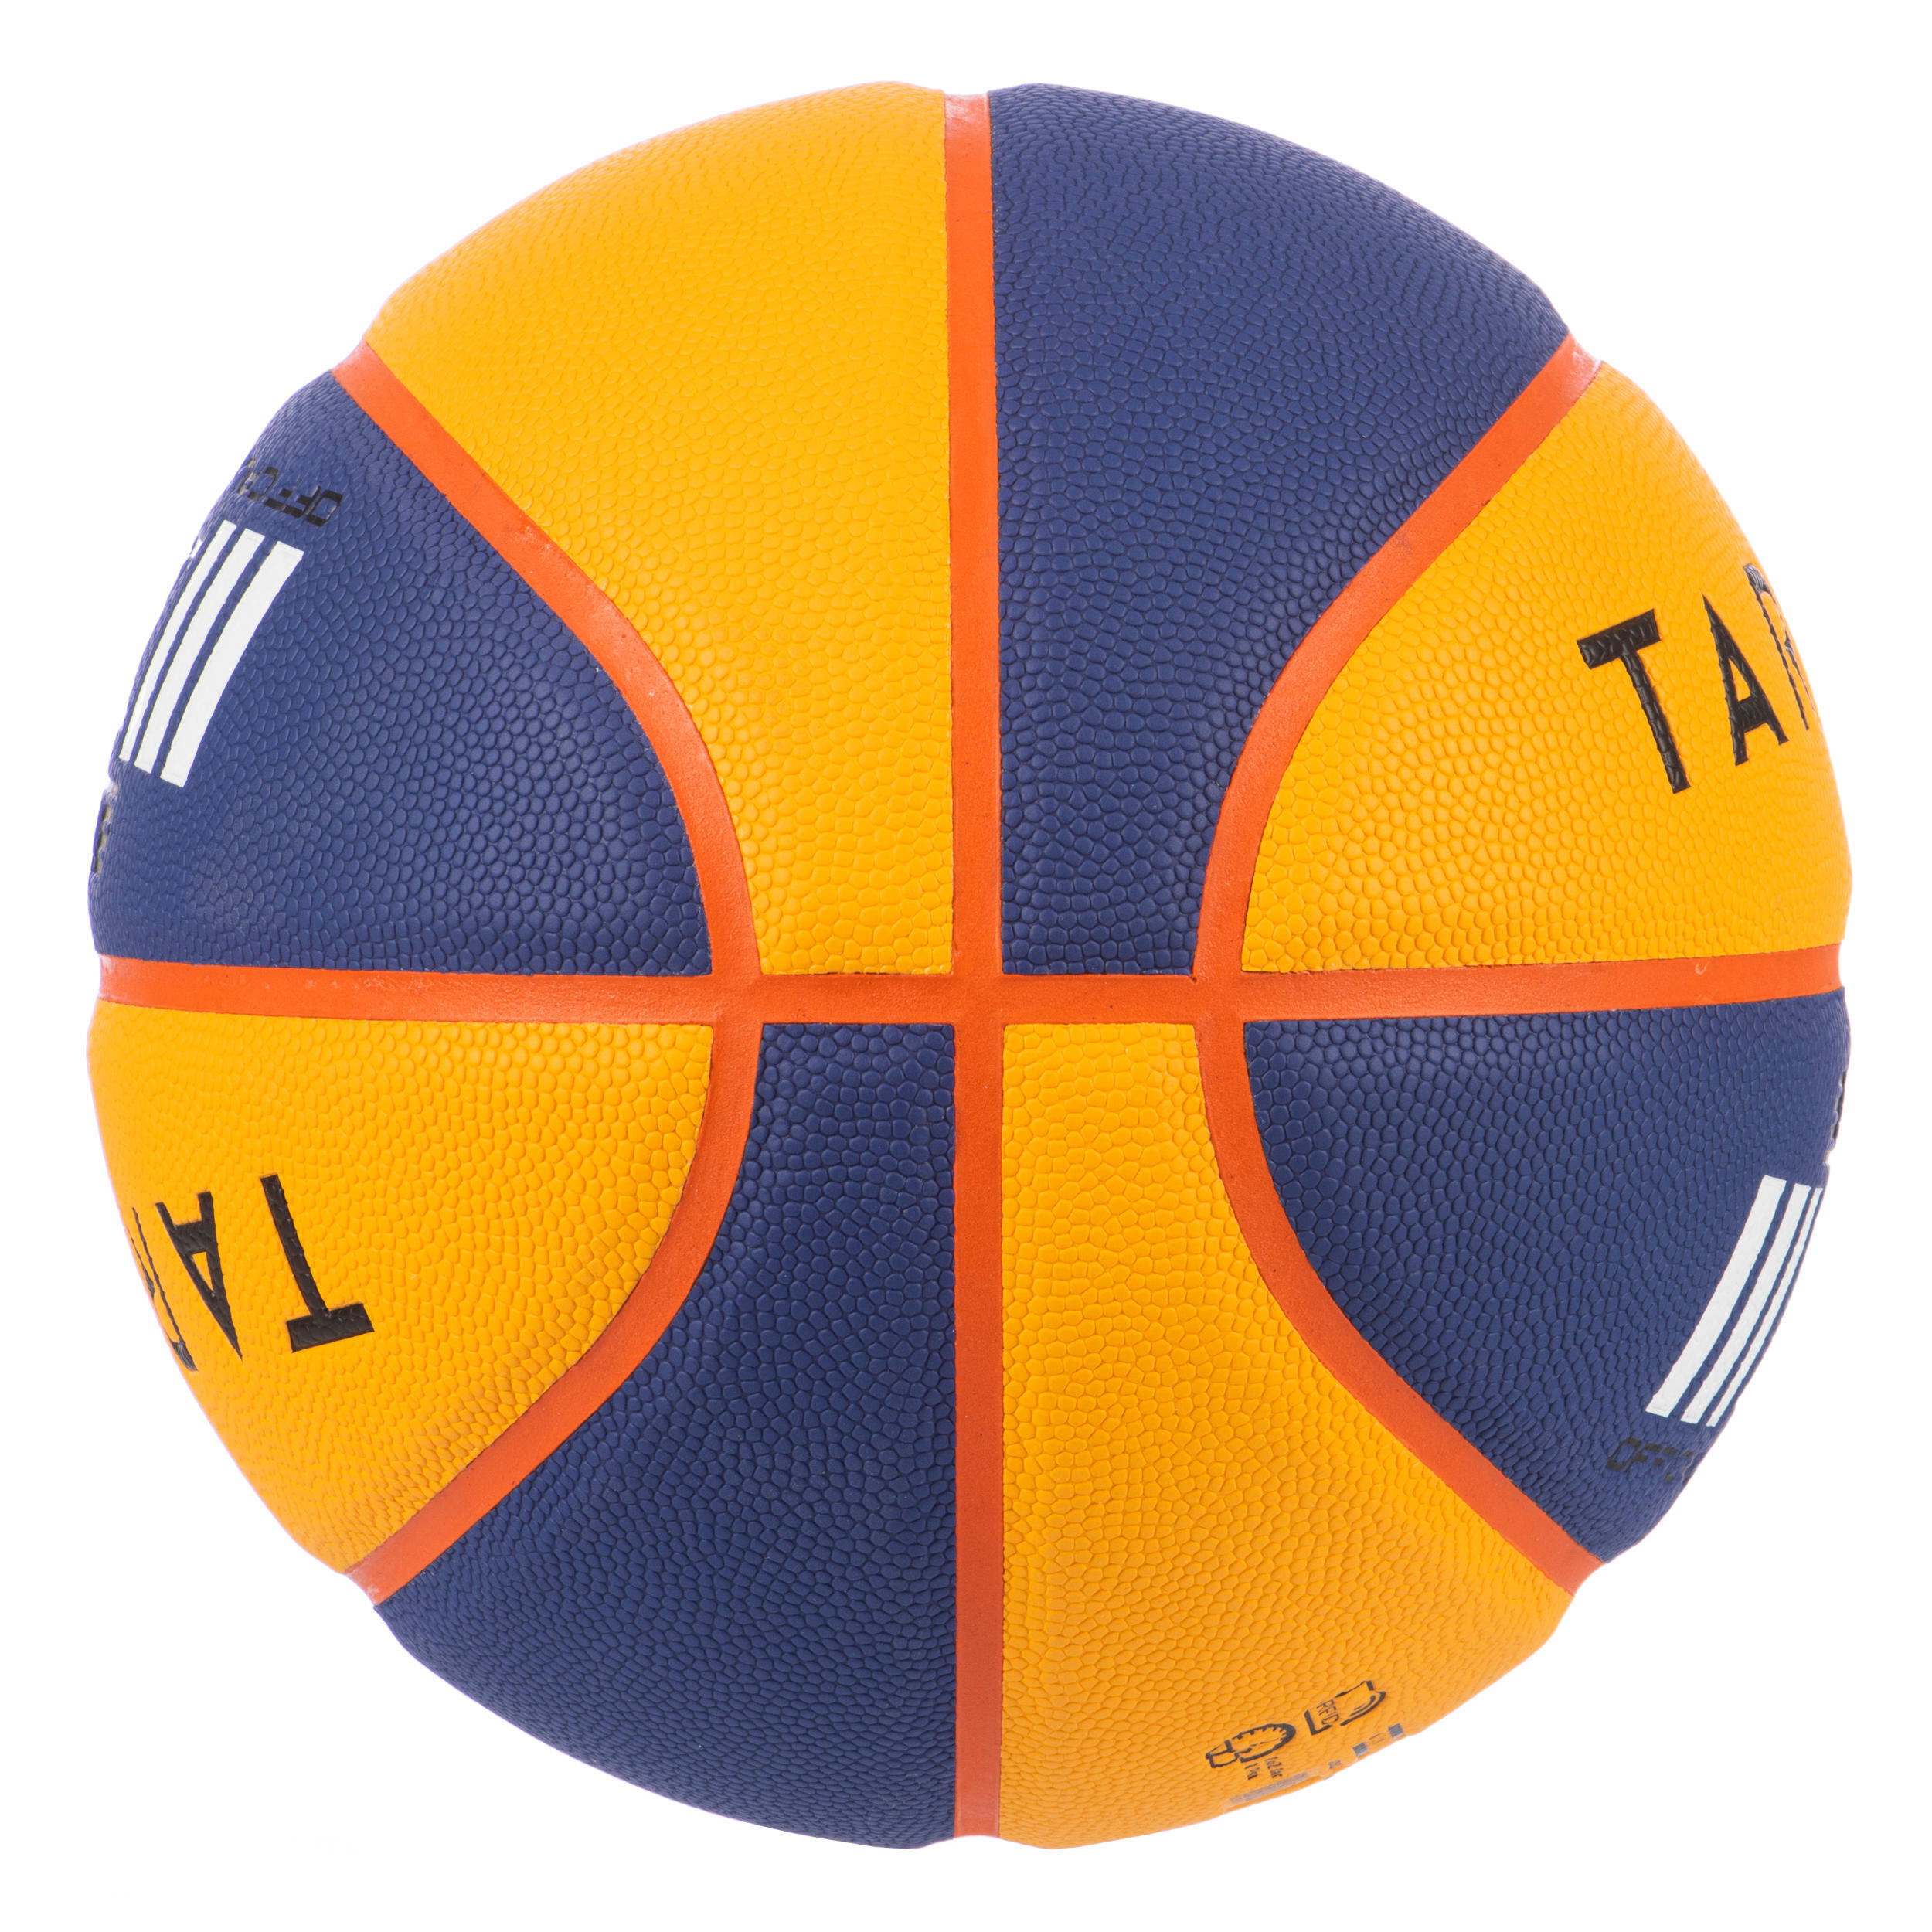 Basketball 3x3 Size 6 BT 500 - Blue/Yellow 3/5